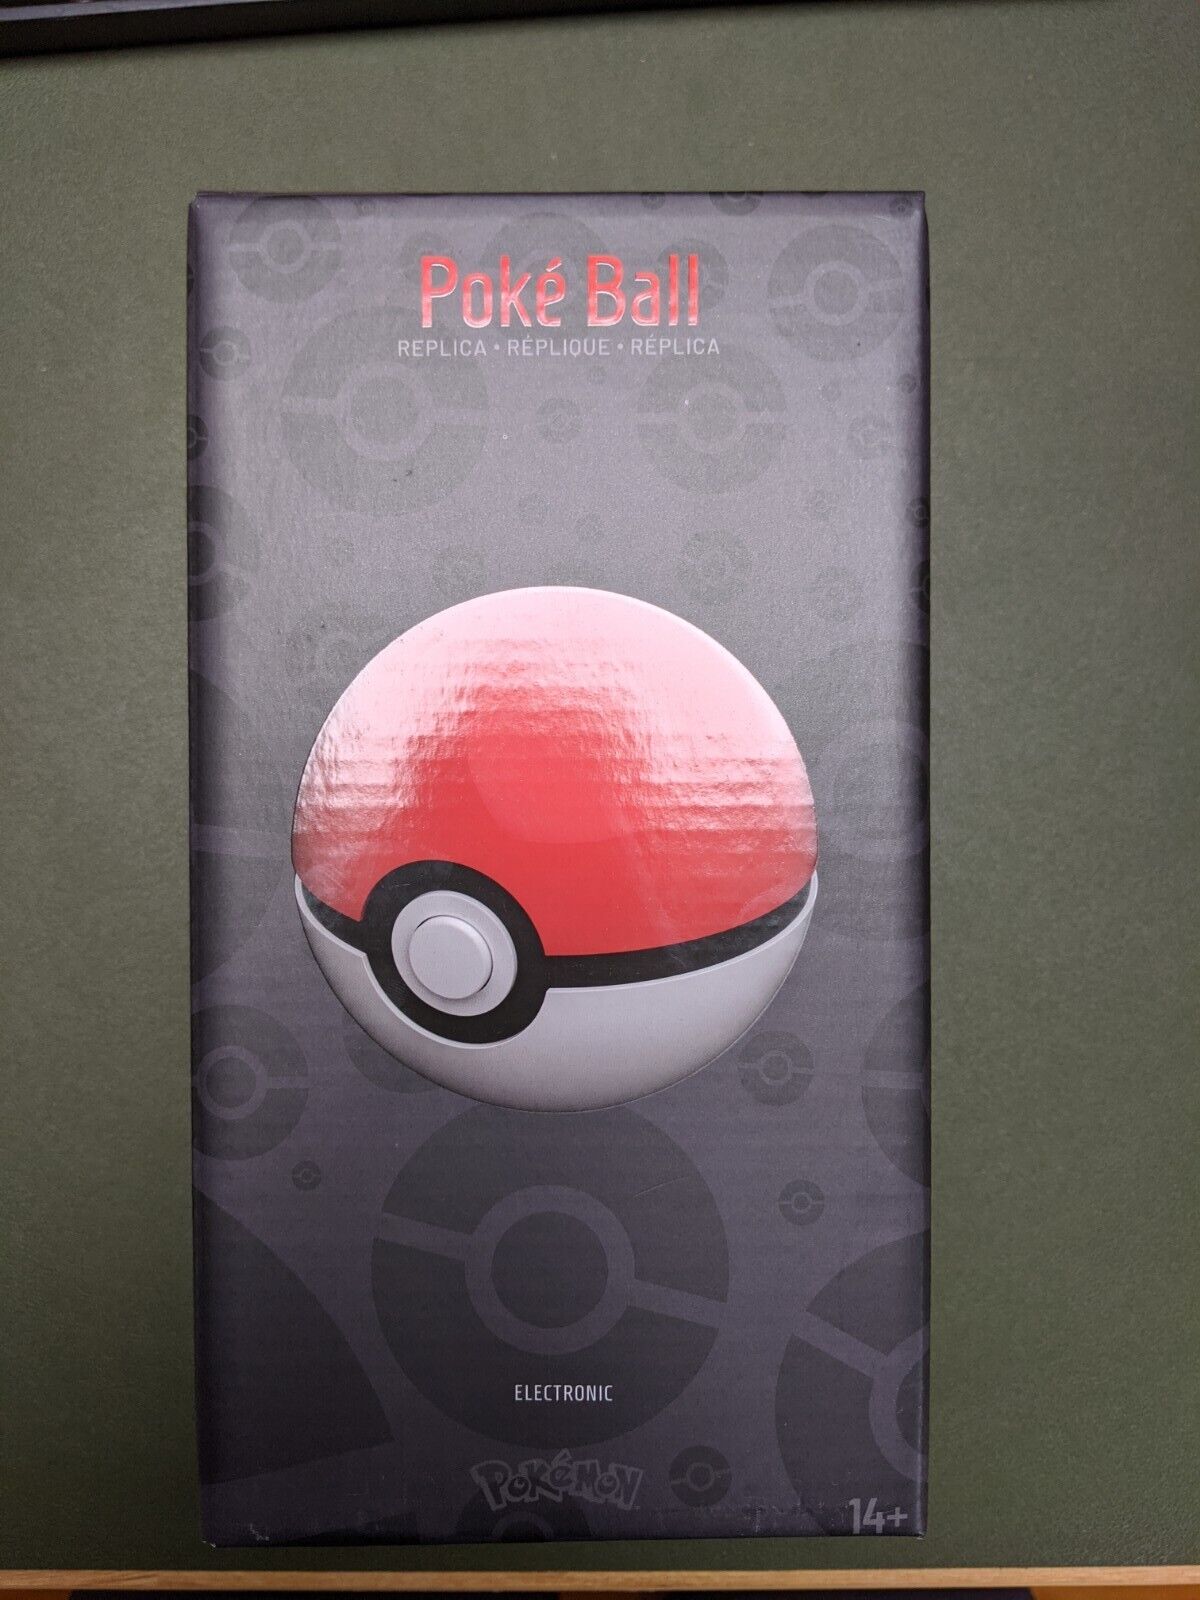 Pokeball Pokemon Poké Ball Electronic Die-Cast Metal Replica by Wand Company 